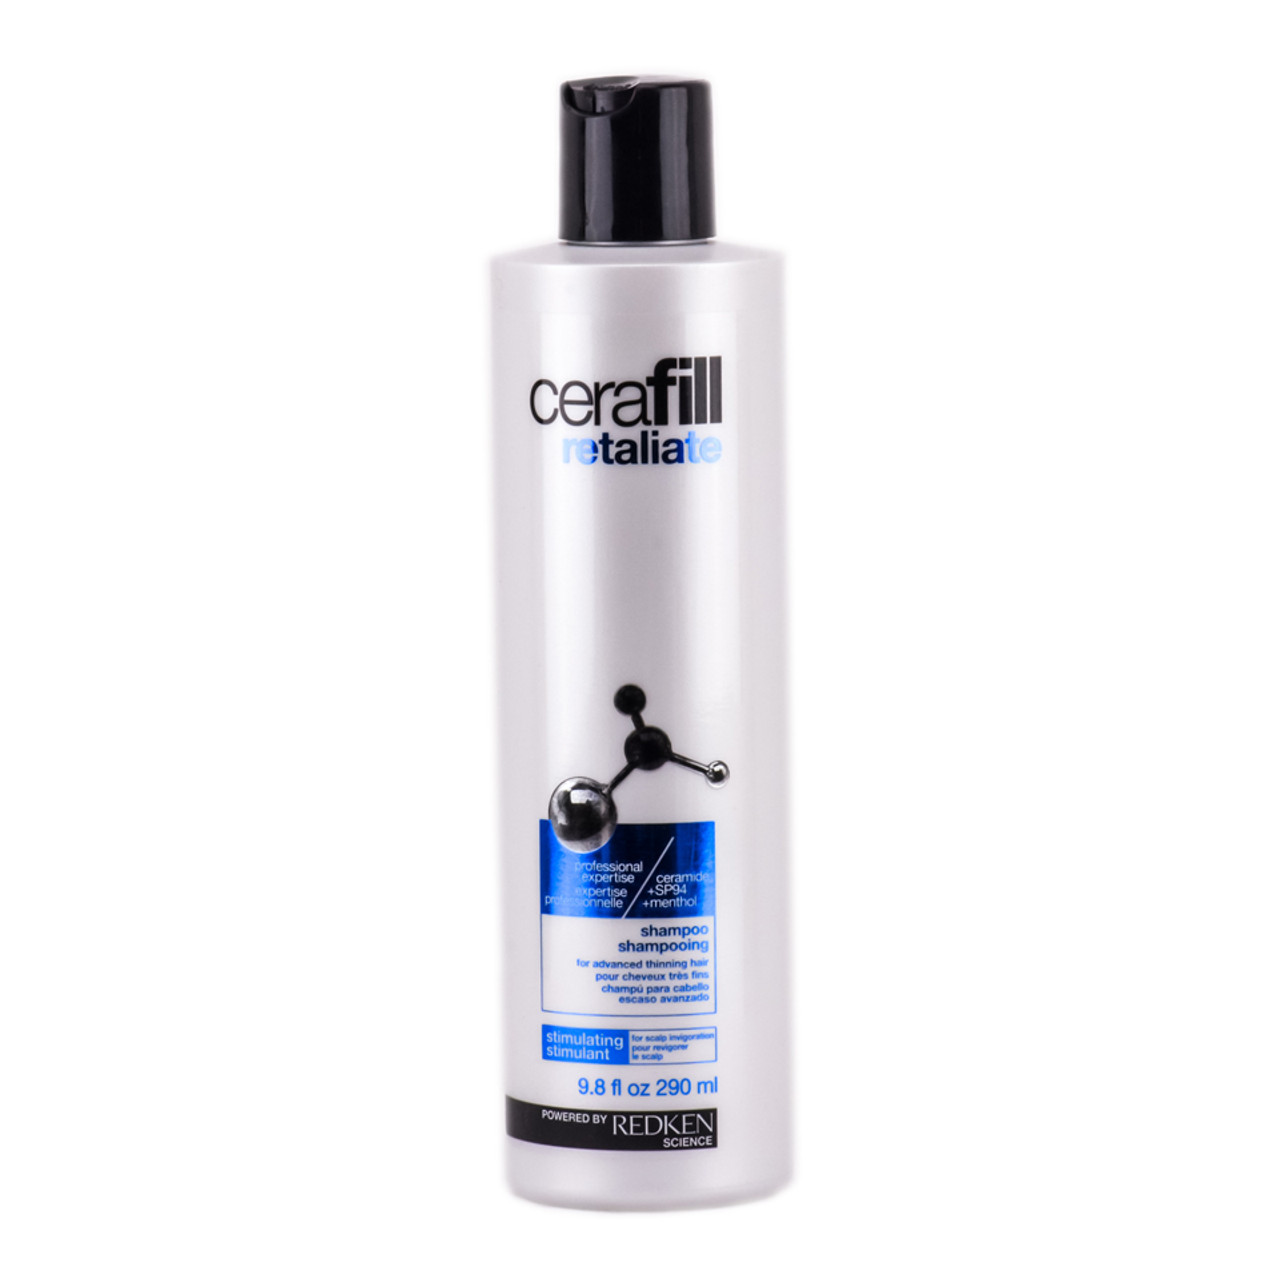 Redken Cerafill Retaliate Shampoo For Advanced Thinning Hair